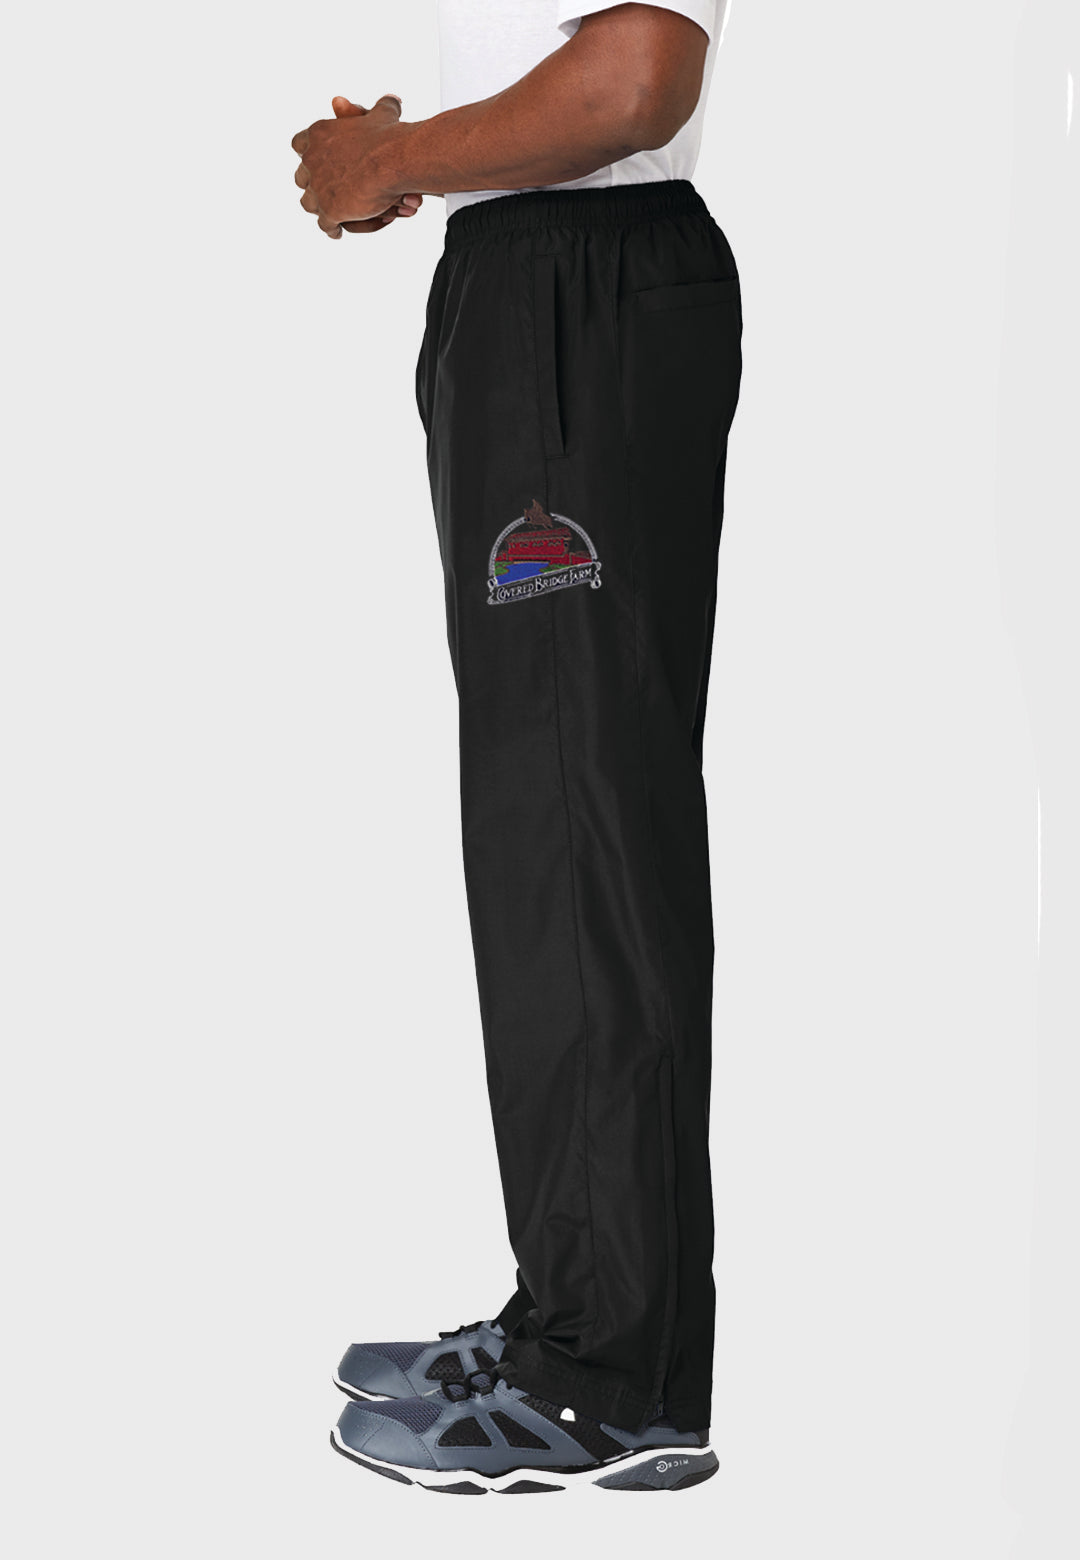 Covered Bridge Farm Sport-Tek® Black Pull-On Wind Pant (Unisex) - Adult + Youth sizes